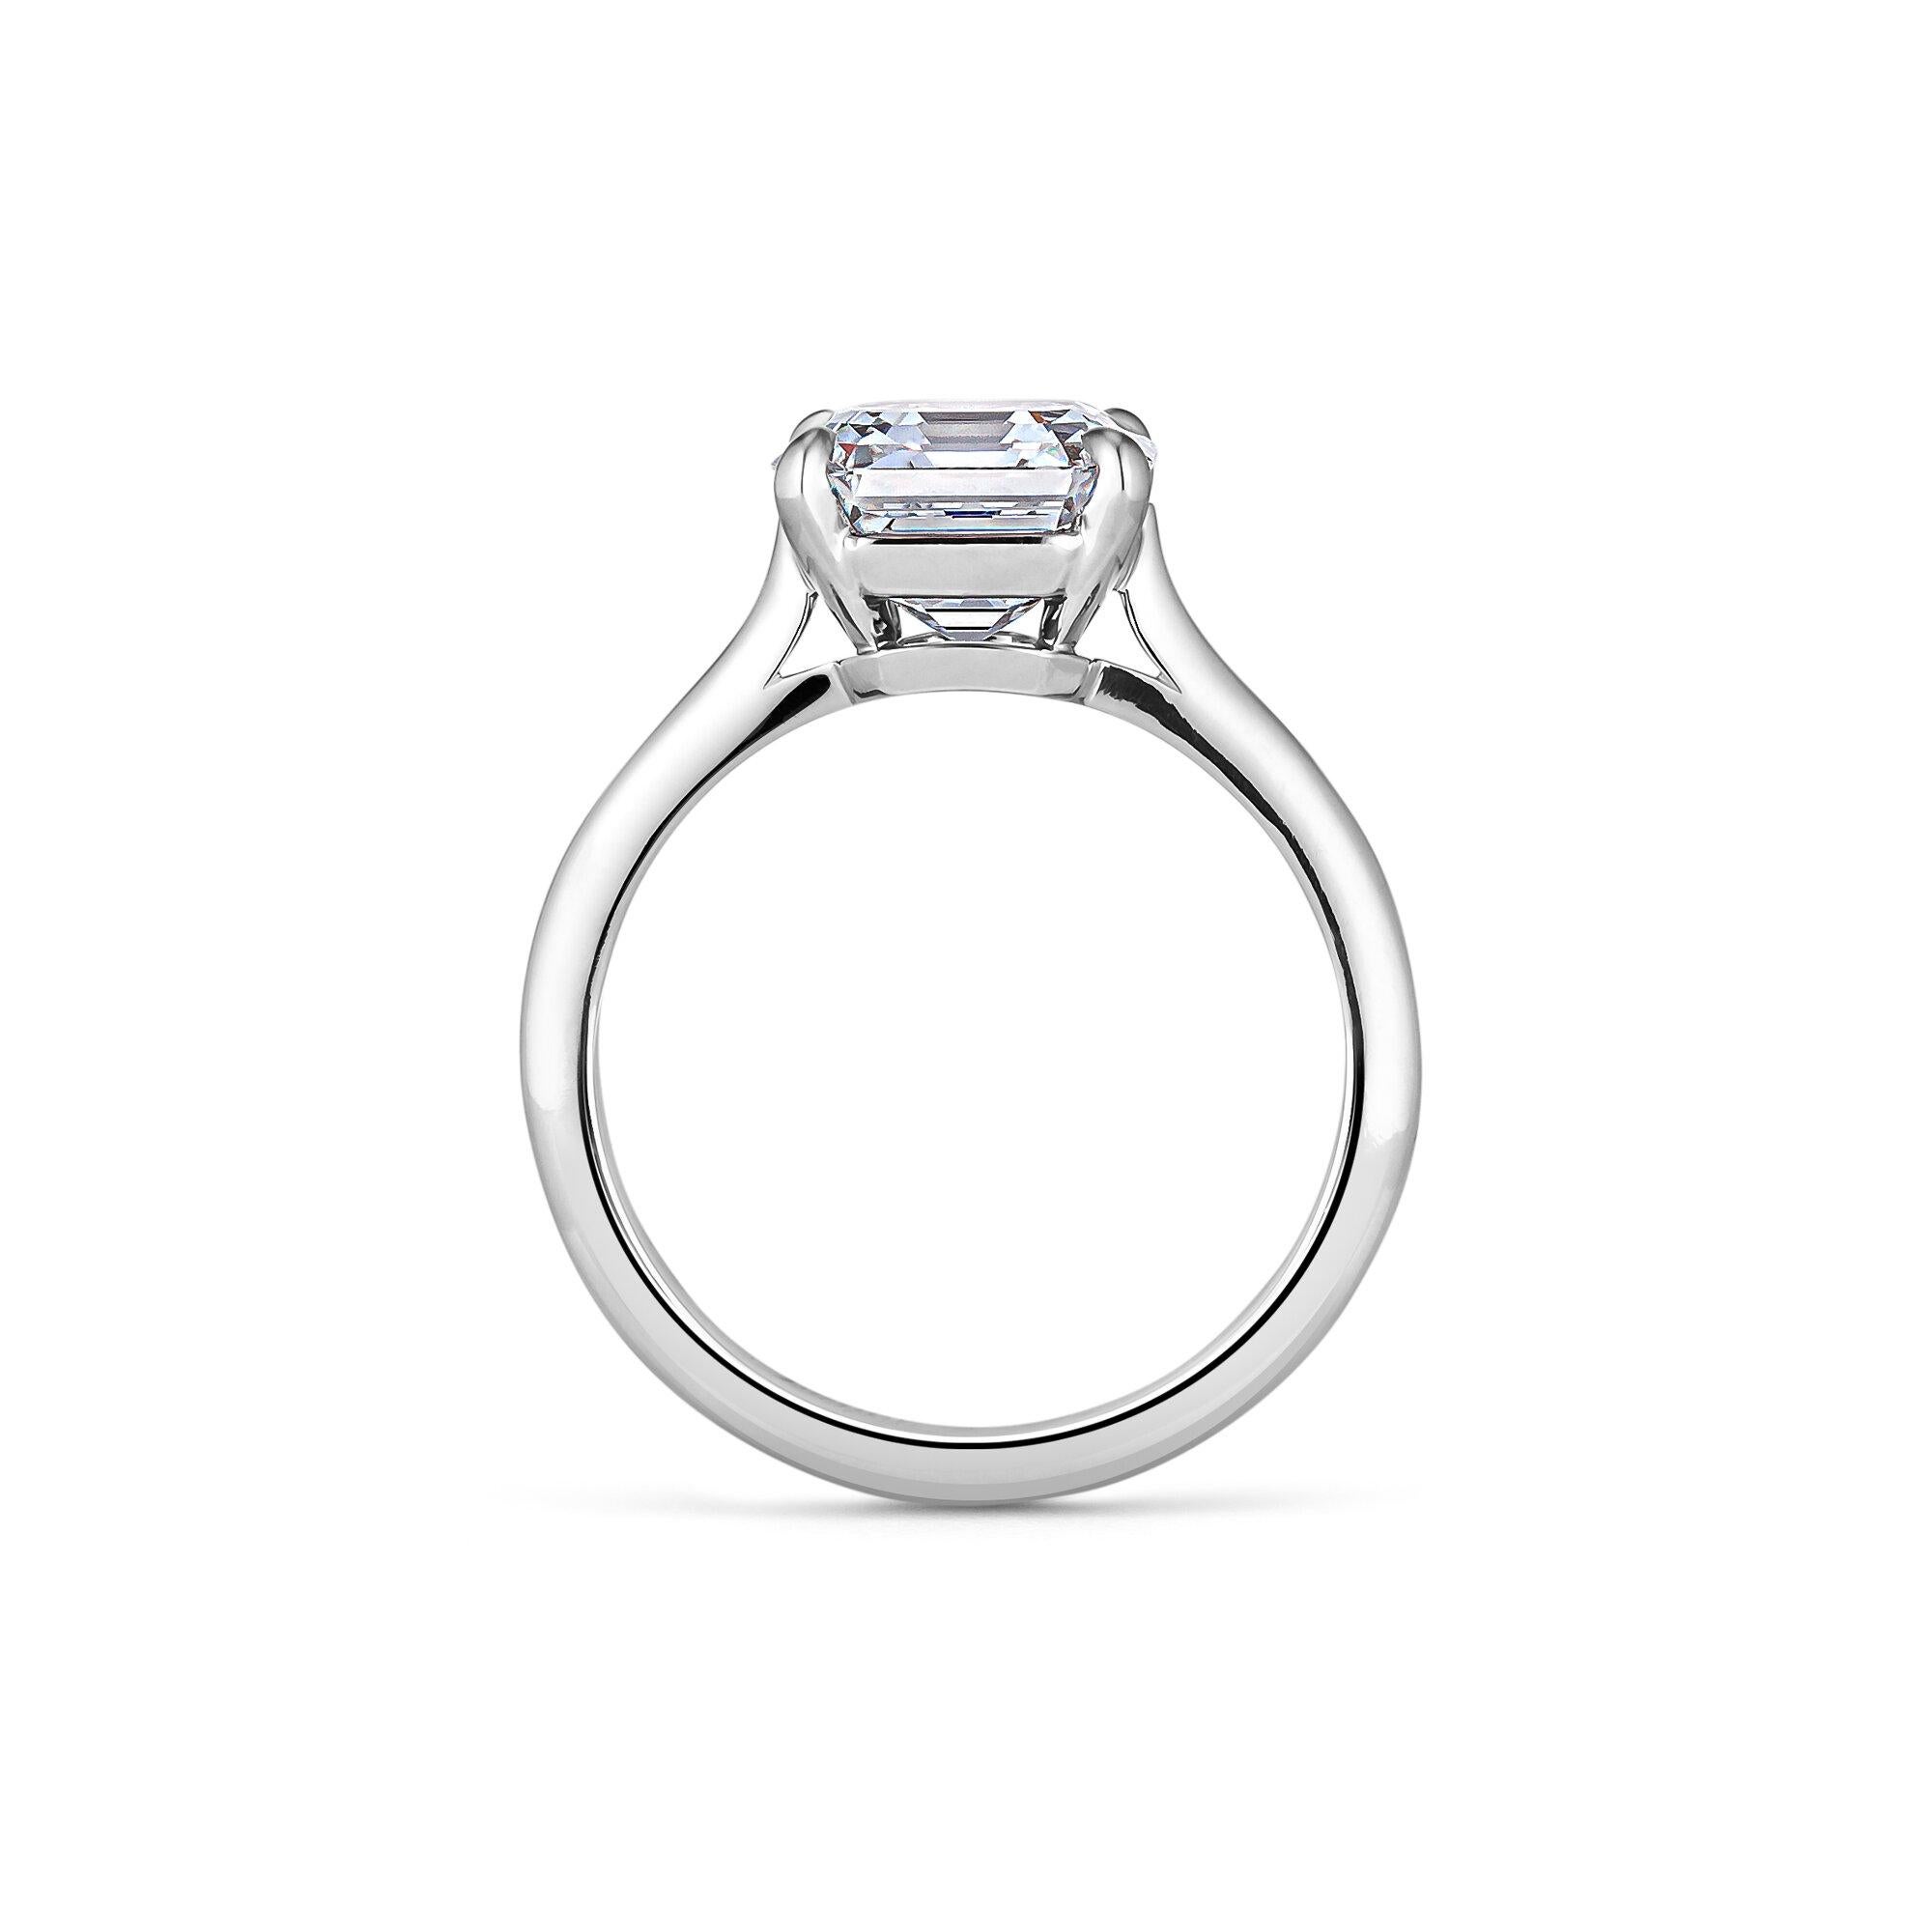 Contemporary 3.26 Carat Square Asscher Cut Diamond Platinum Engagement Ring